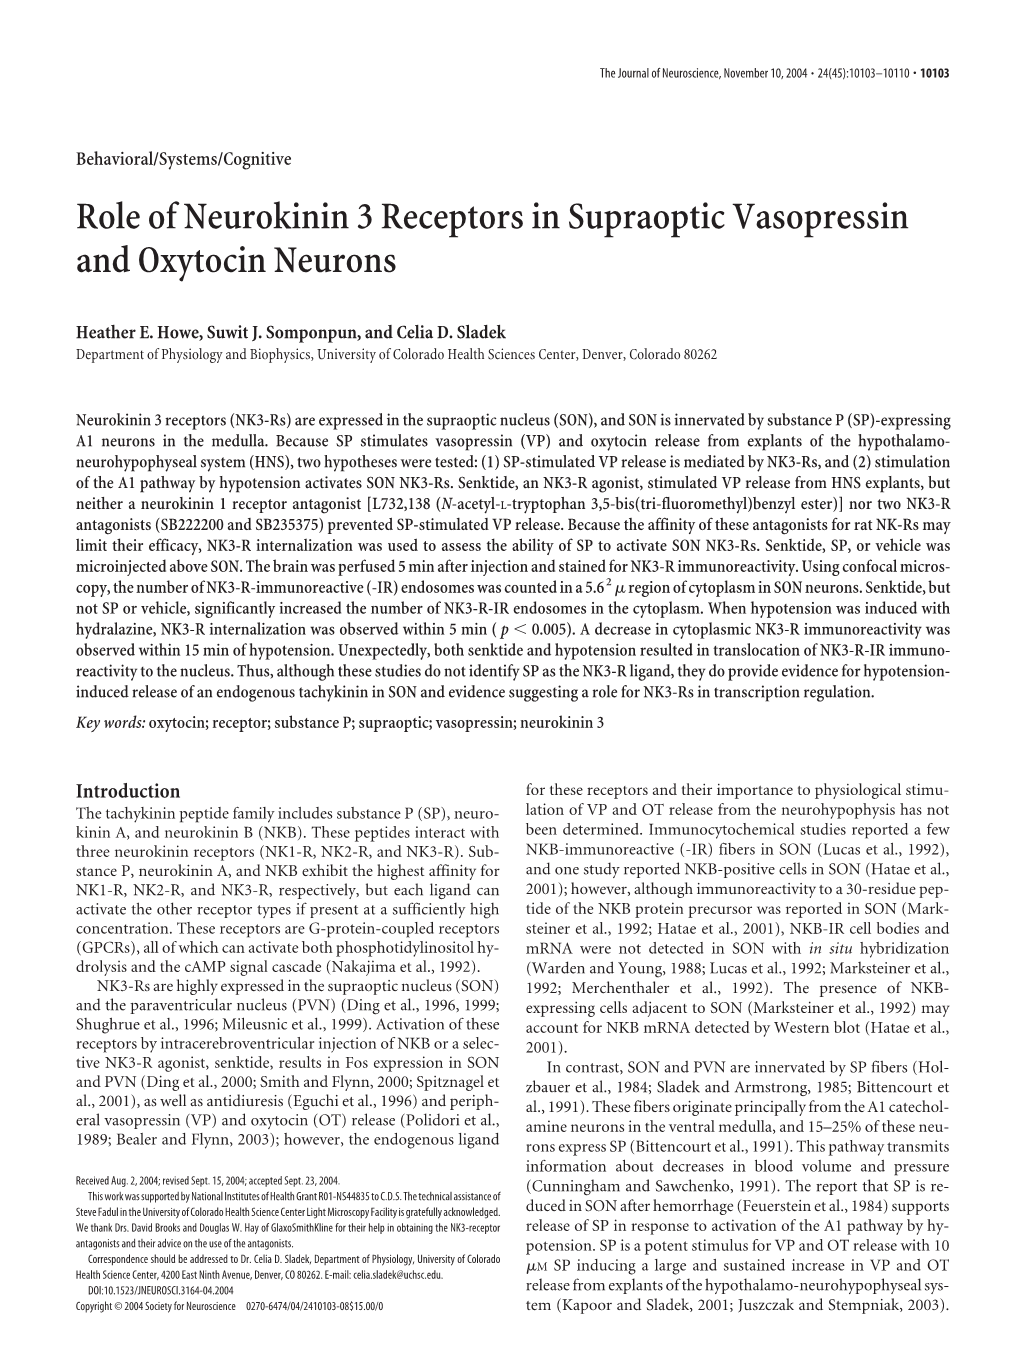 Role of Neurokinin 3 Receptors in Supraoptic Vasopressin and Oxytocin Neurons